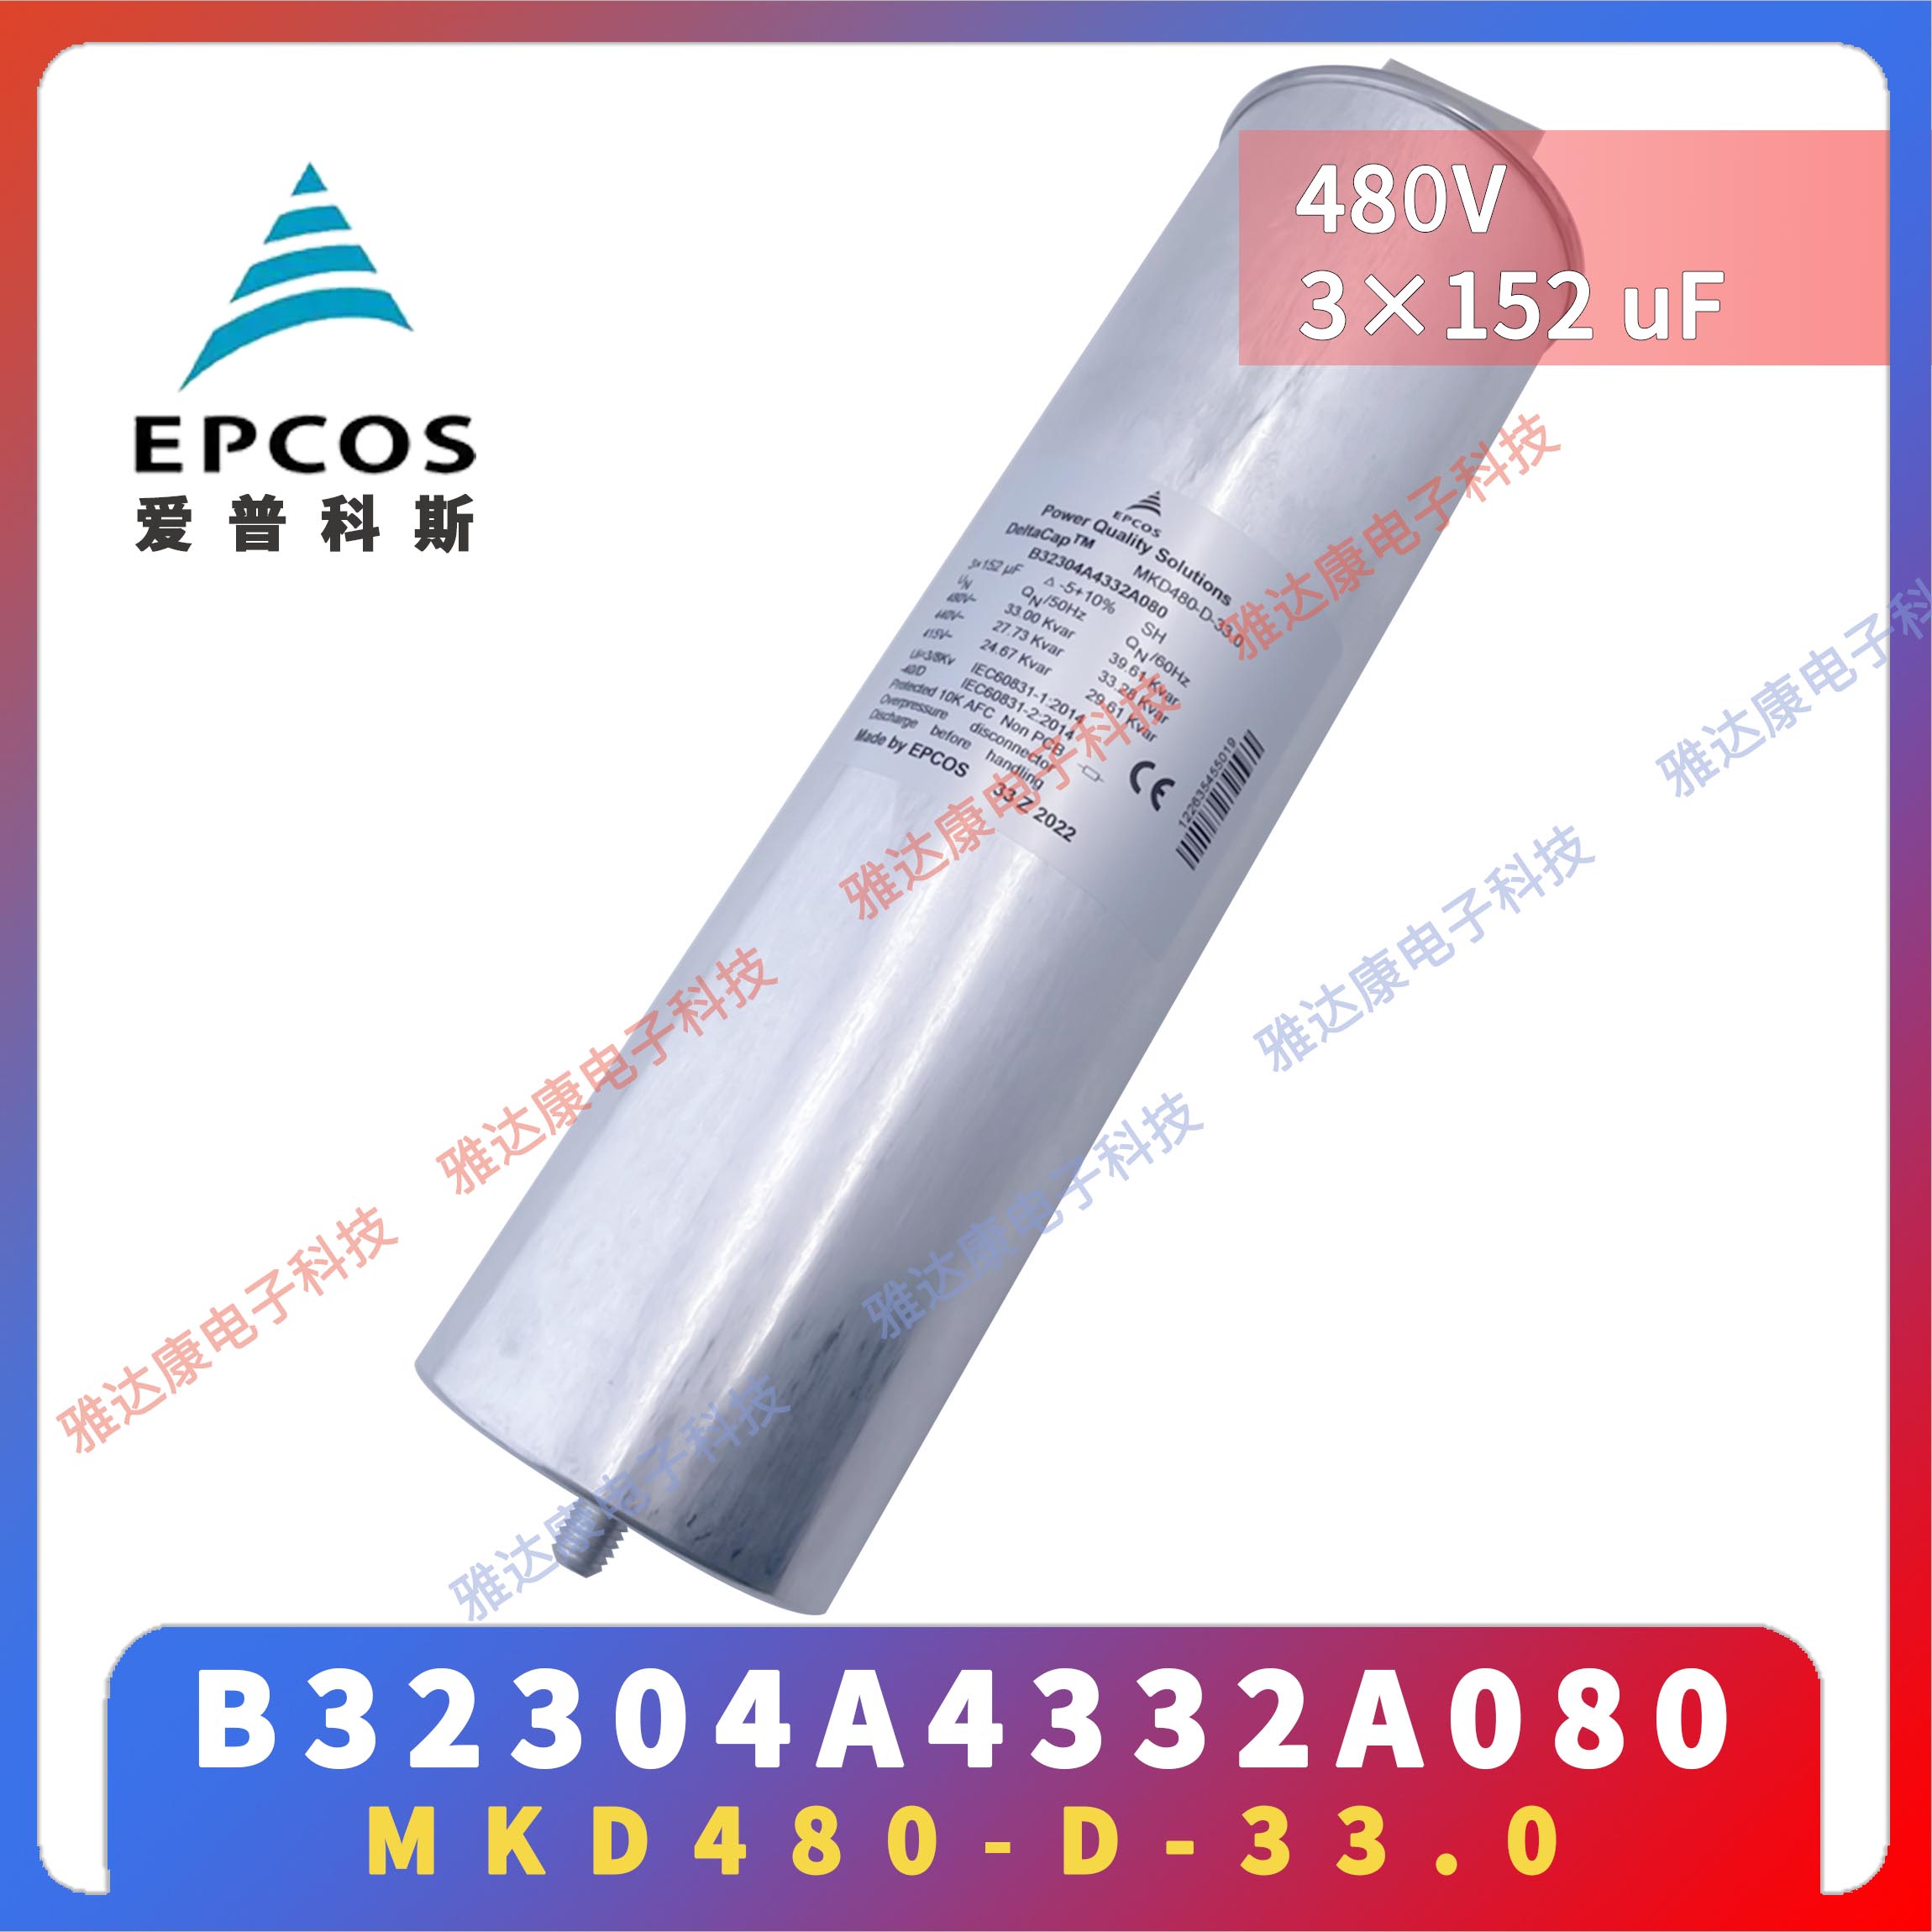 EPCOS电容器B25673A4052A000 全新原箱薄膜电容器 MKK400-D-5-02图片